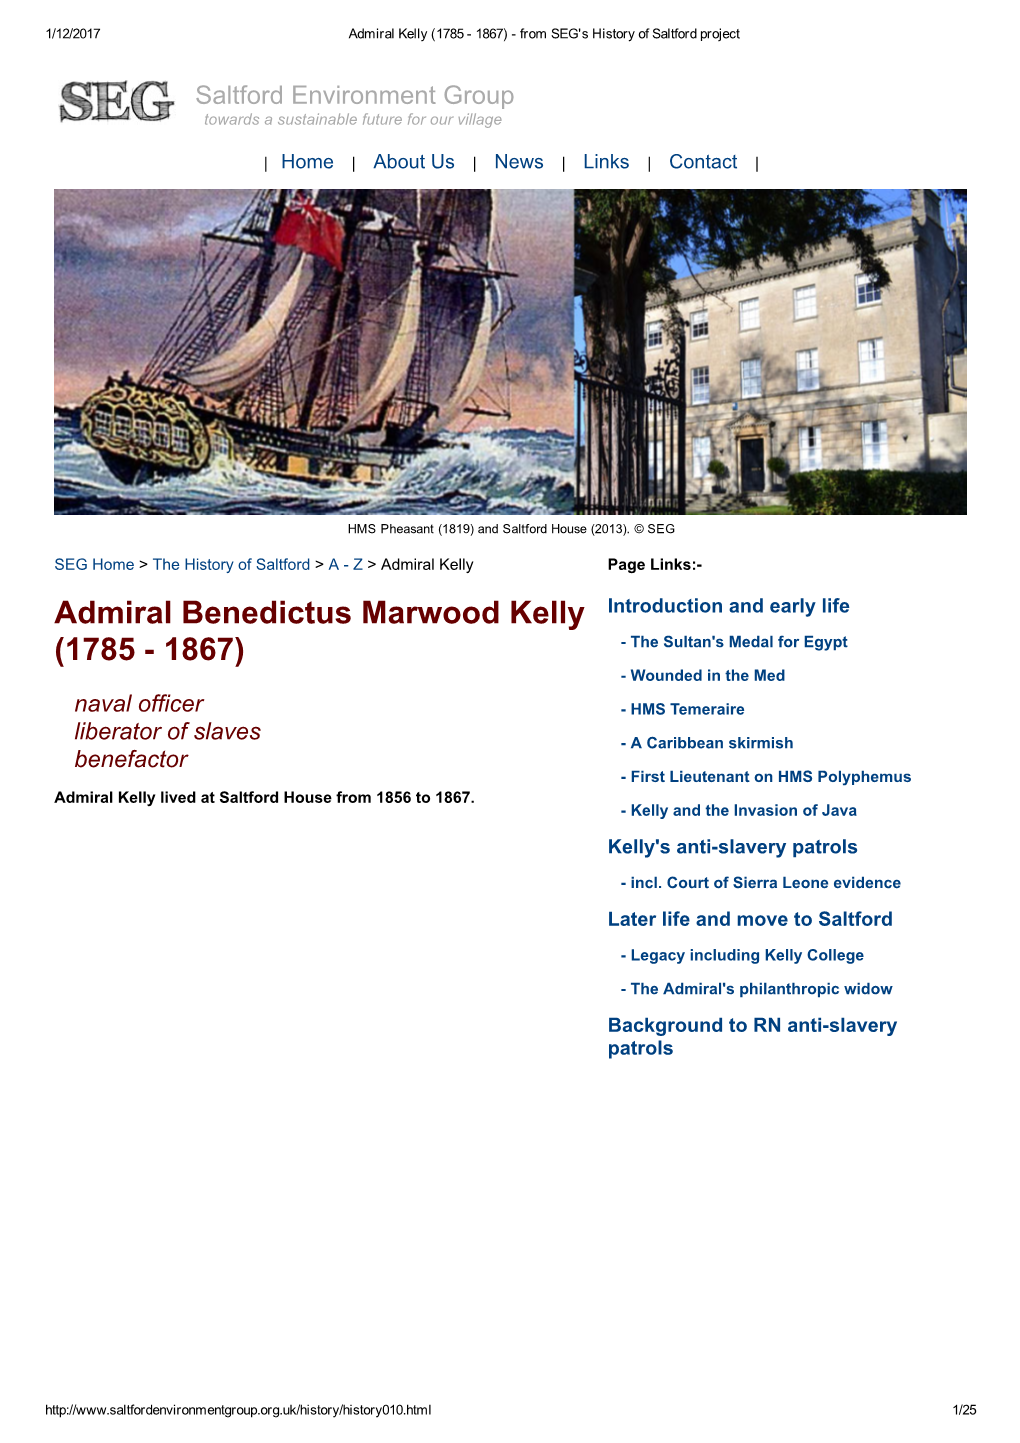 Admiral Benedictus Marwood Kelly (1785Ана1867)